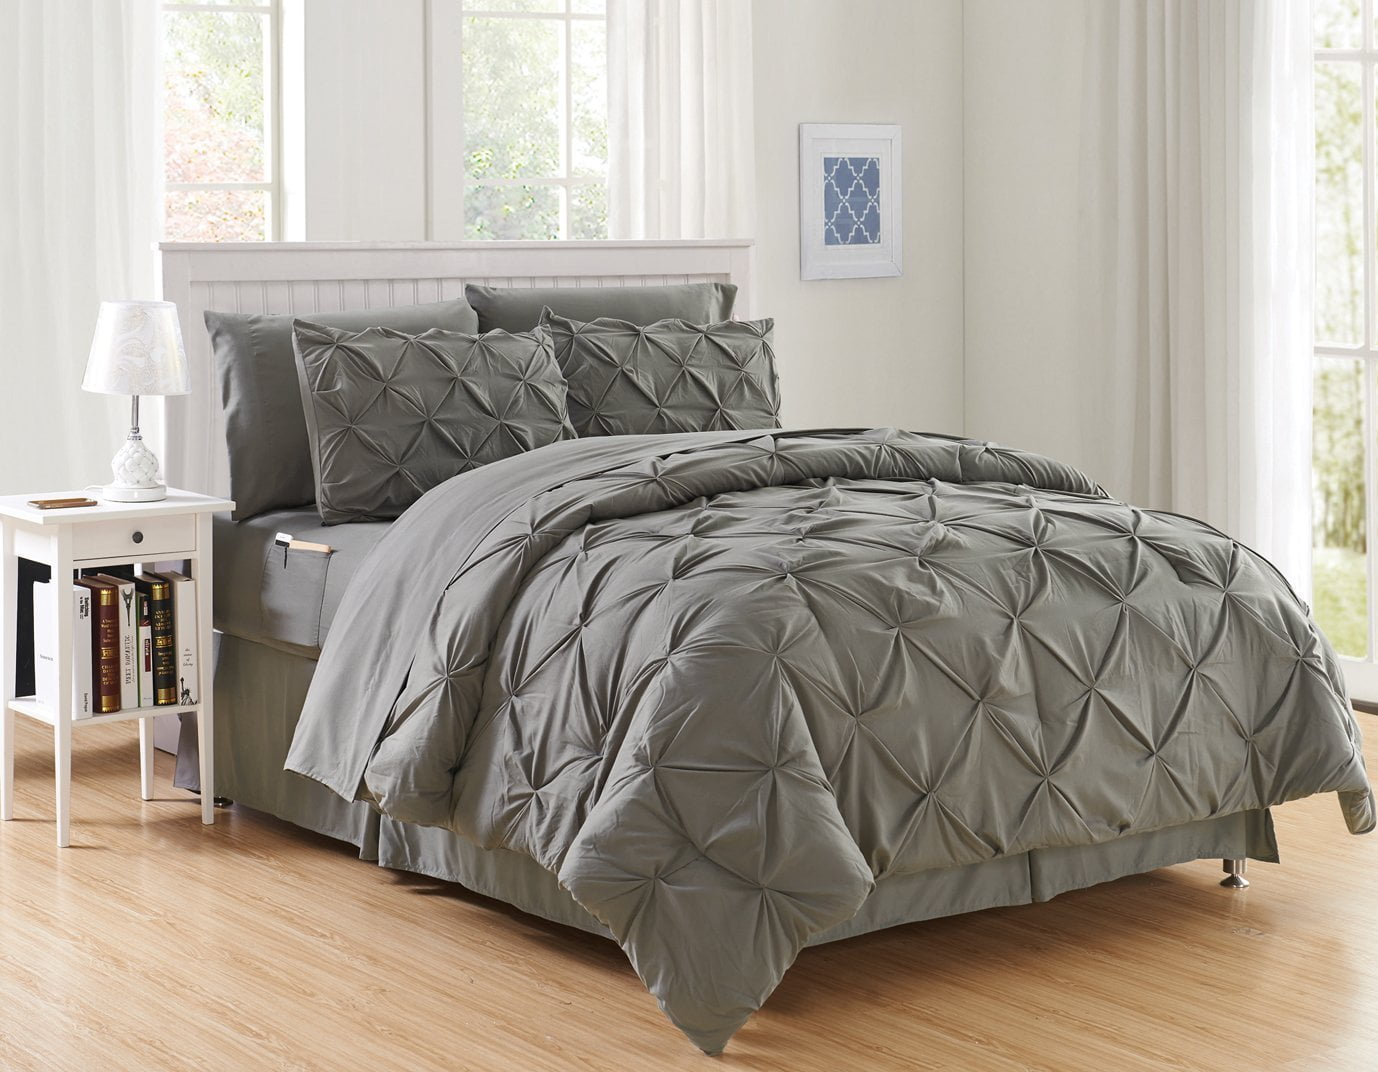 Elegant Comfort Gray 8 Piece Bed in a Bag Comforter Set with Sheets, Queen